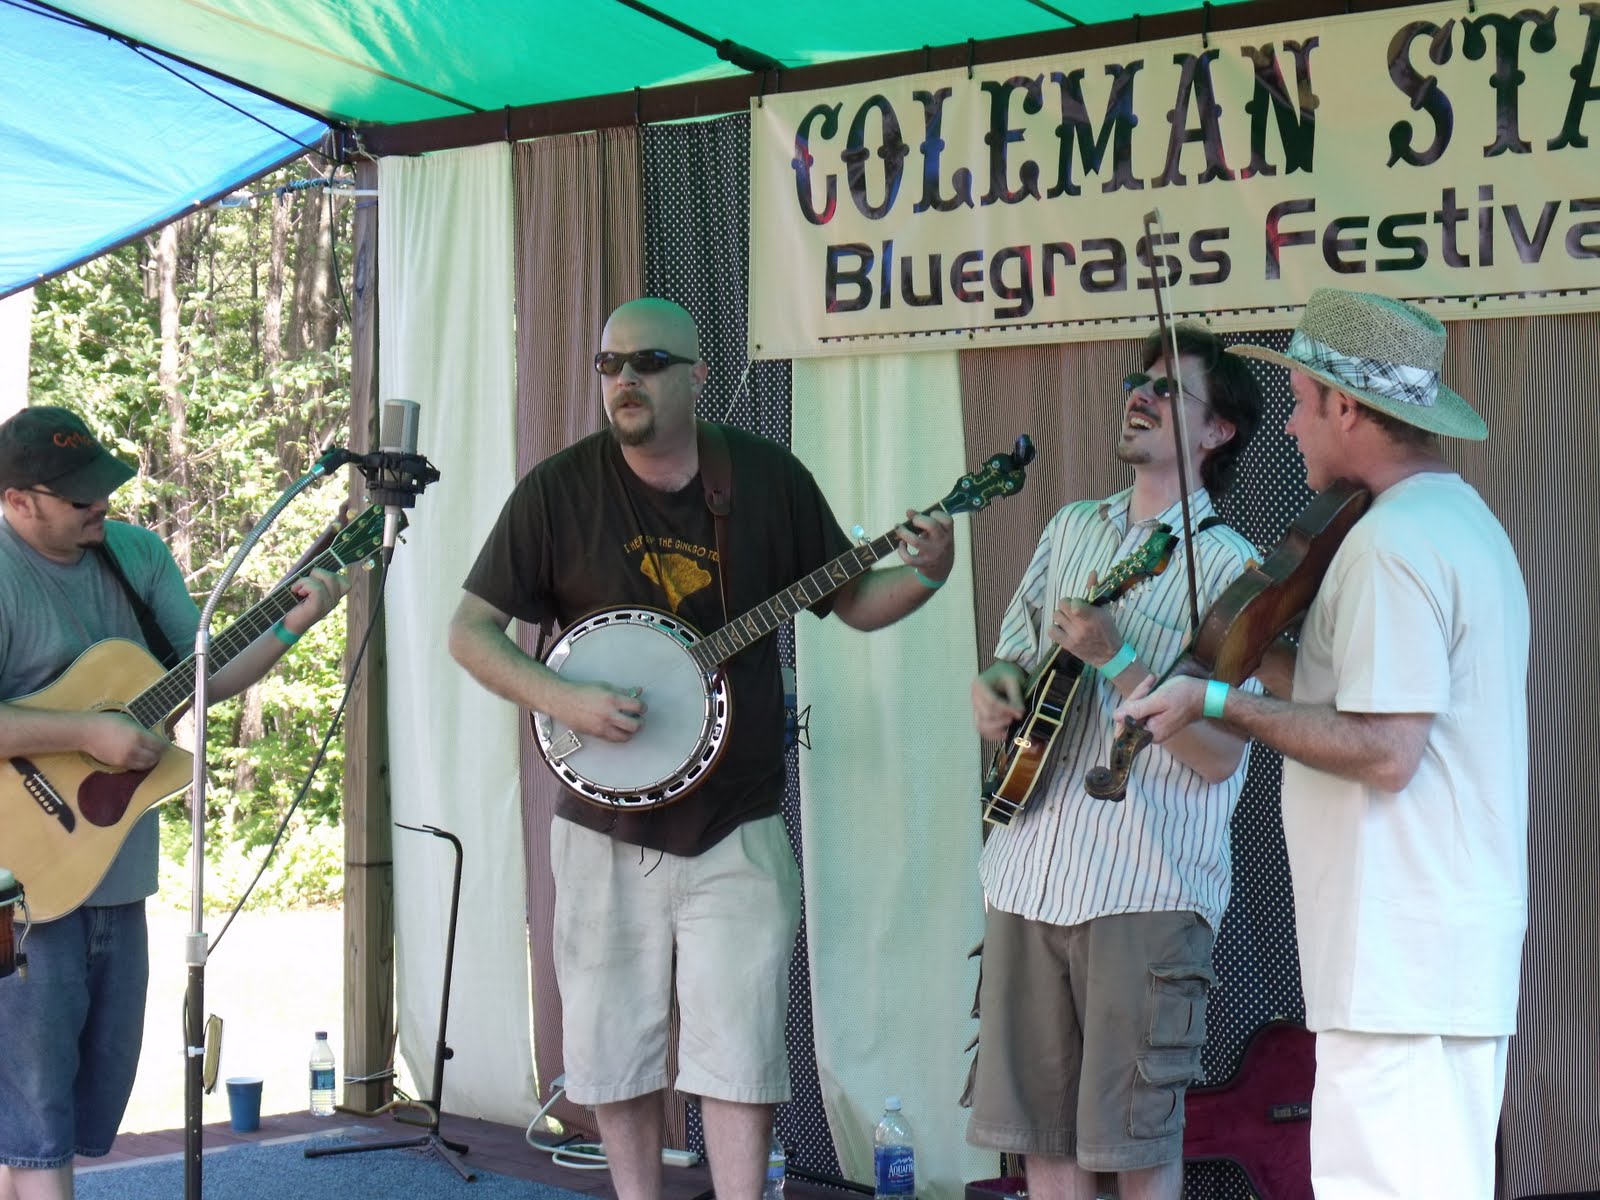  Coal Mountain Ramblers 7/24/10 Coleman Station Bluegrass Fest 